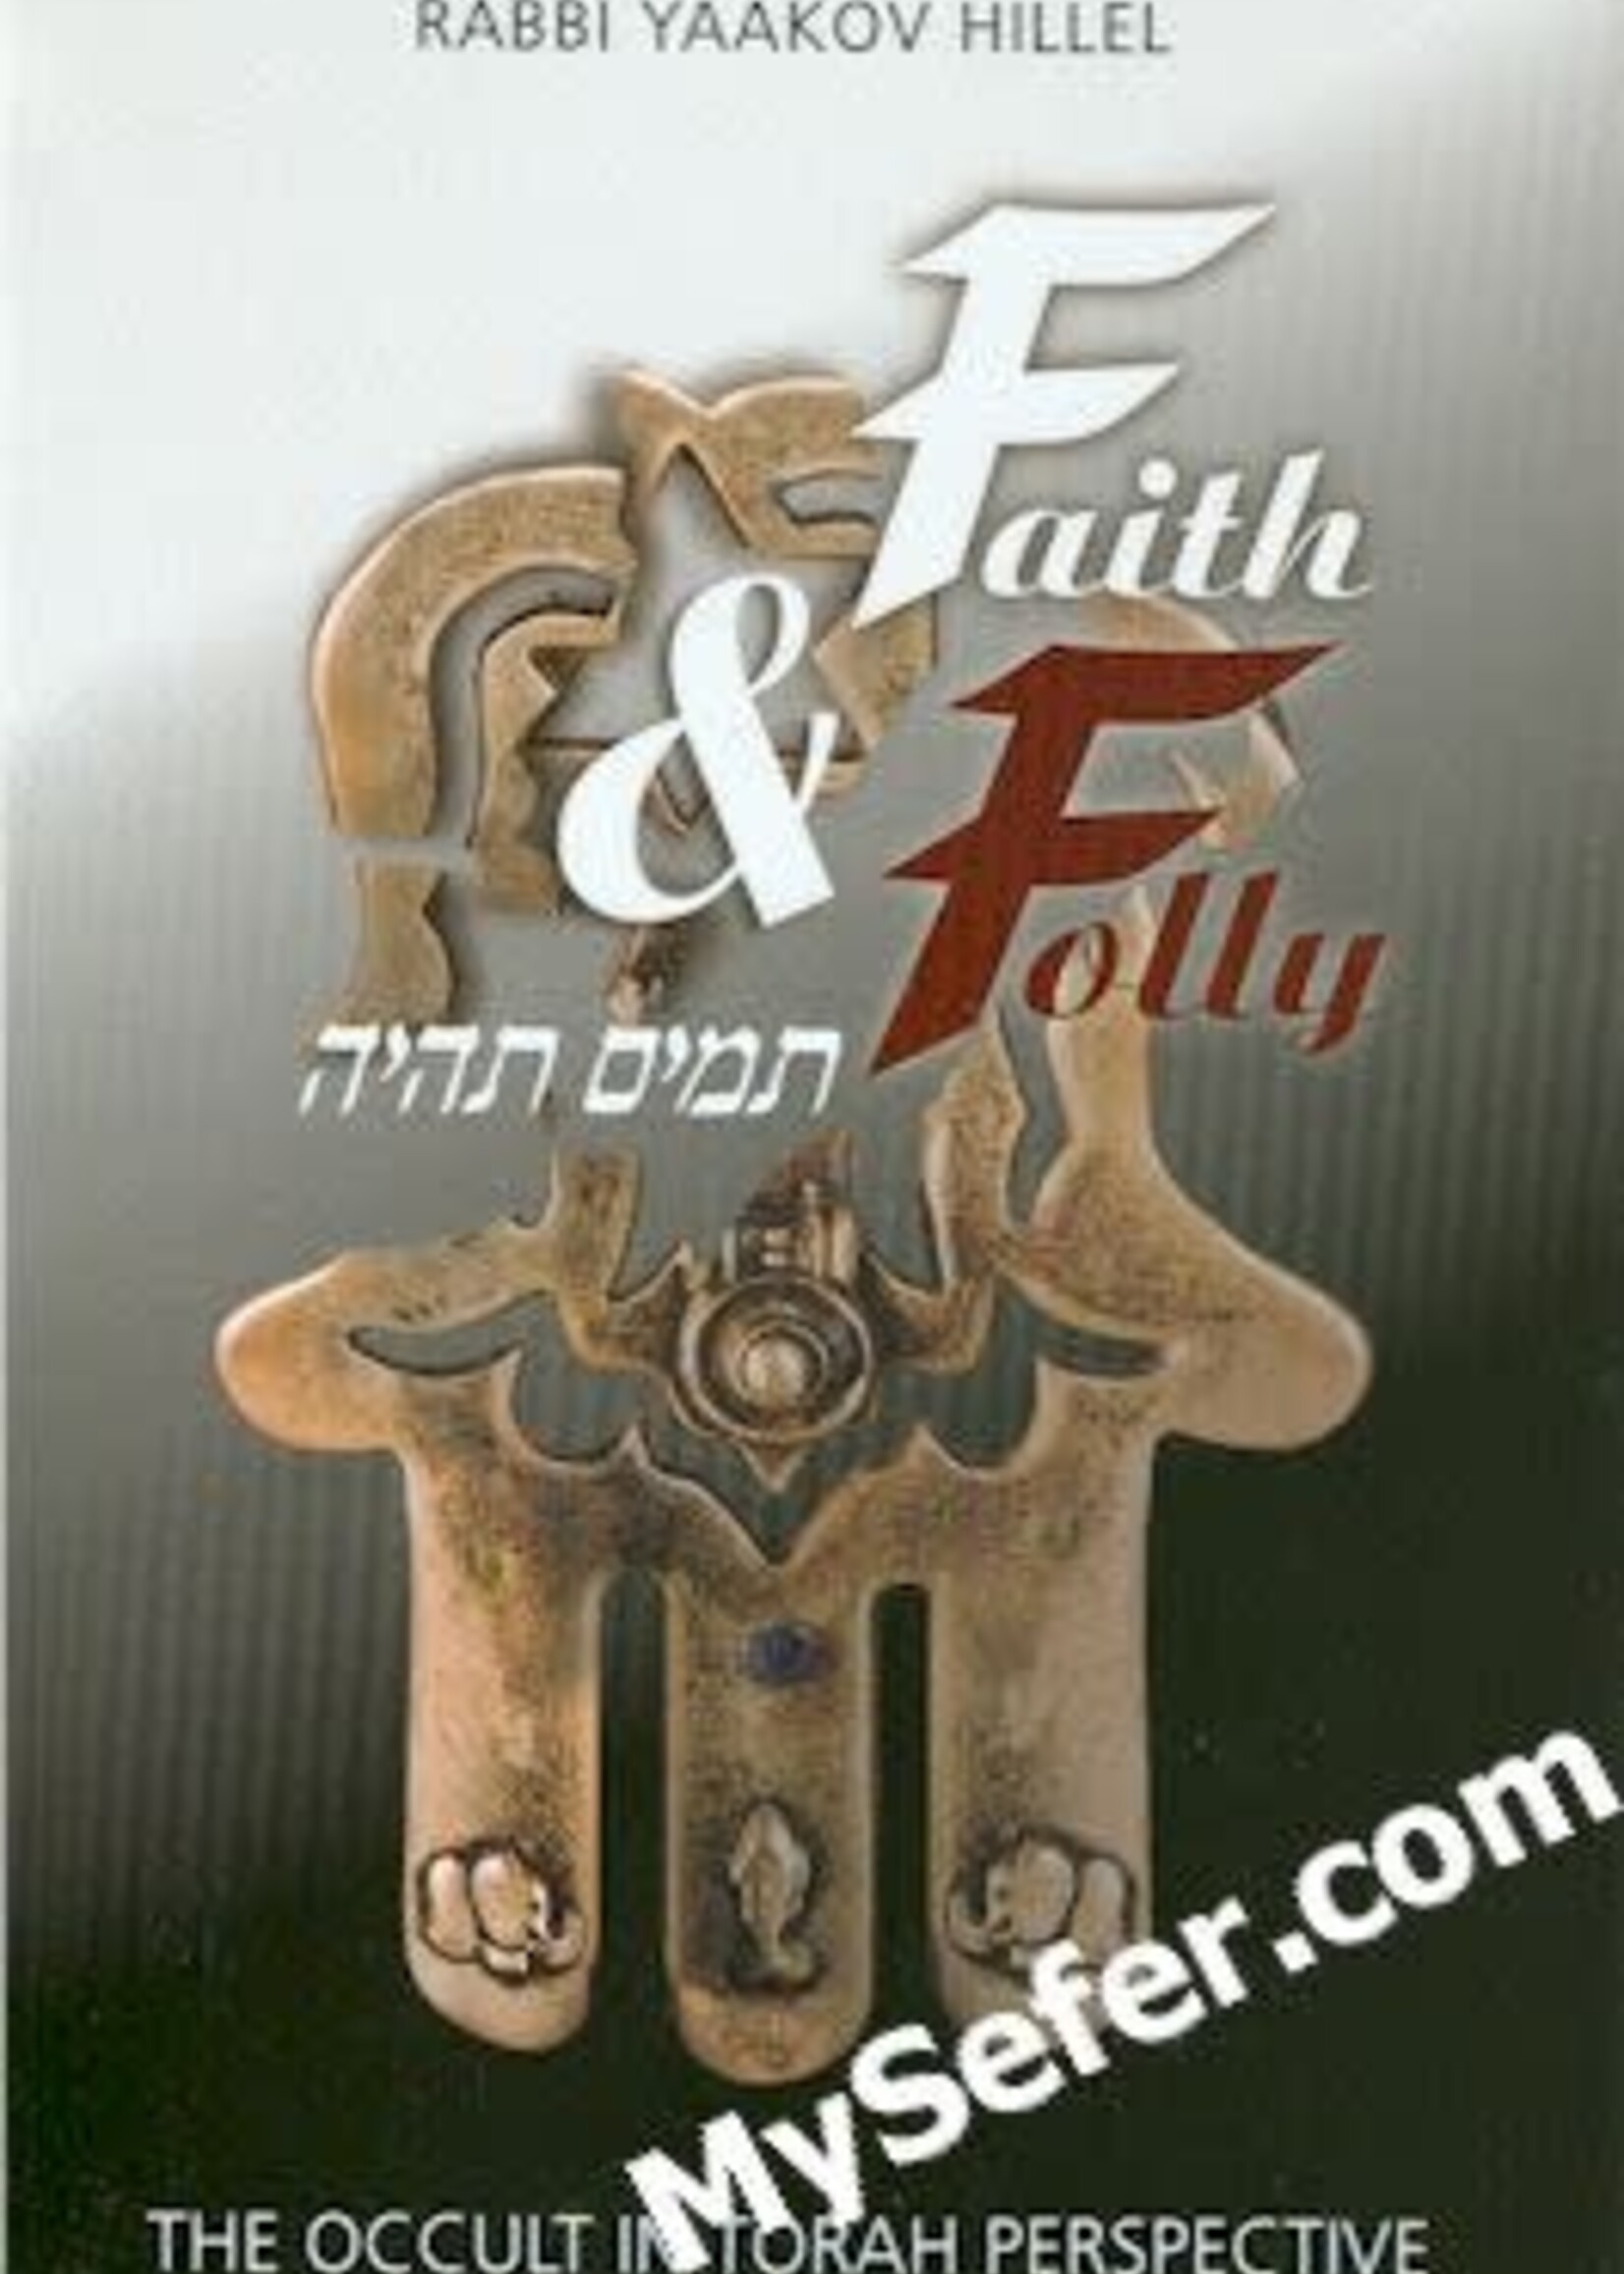 Rabbi Yaakov Hillel Faith and Folly - The Occult in a Torah Perspective